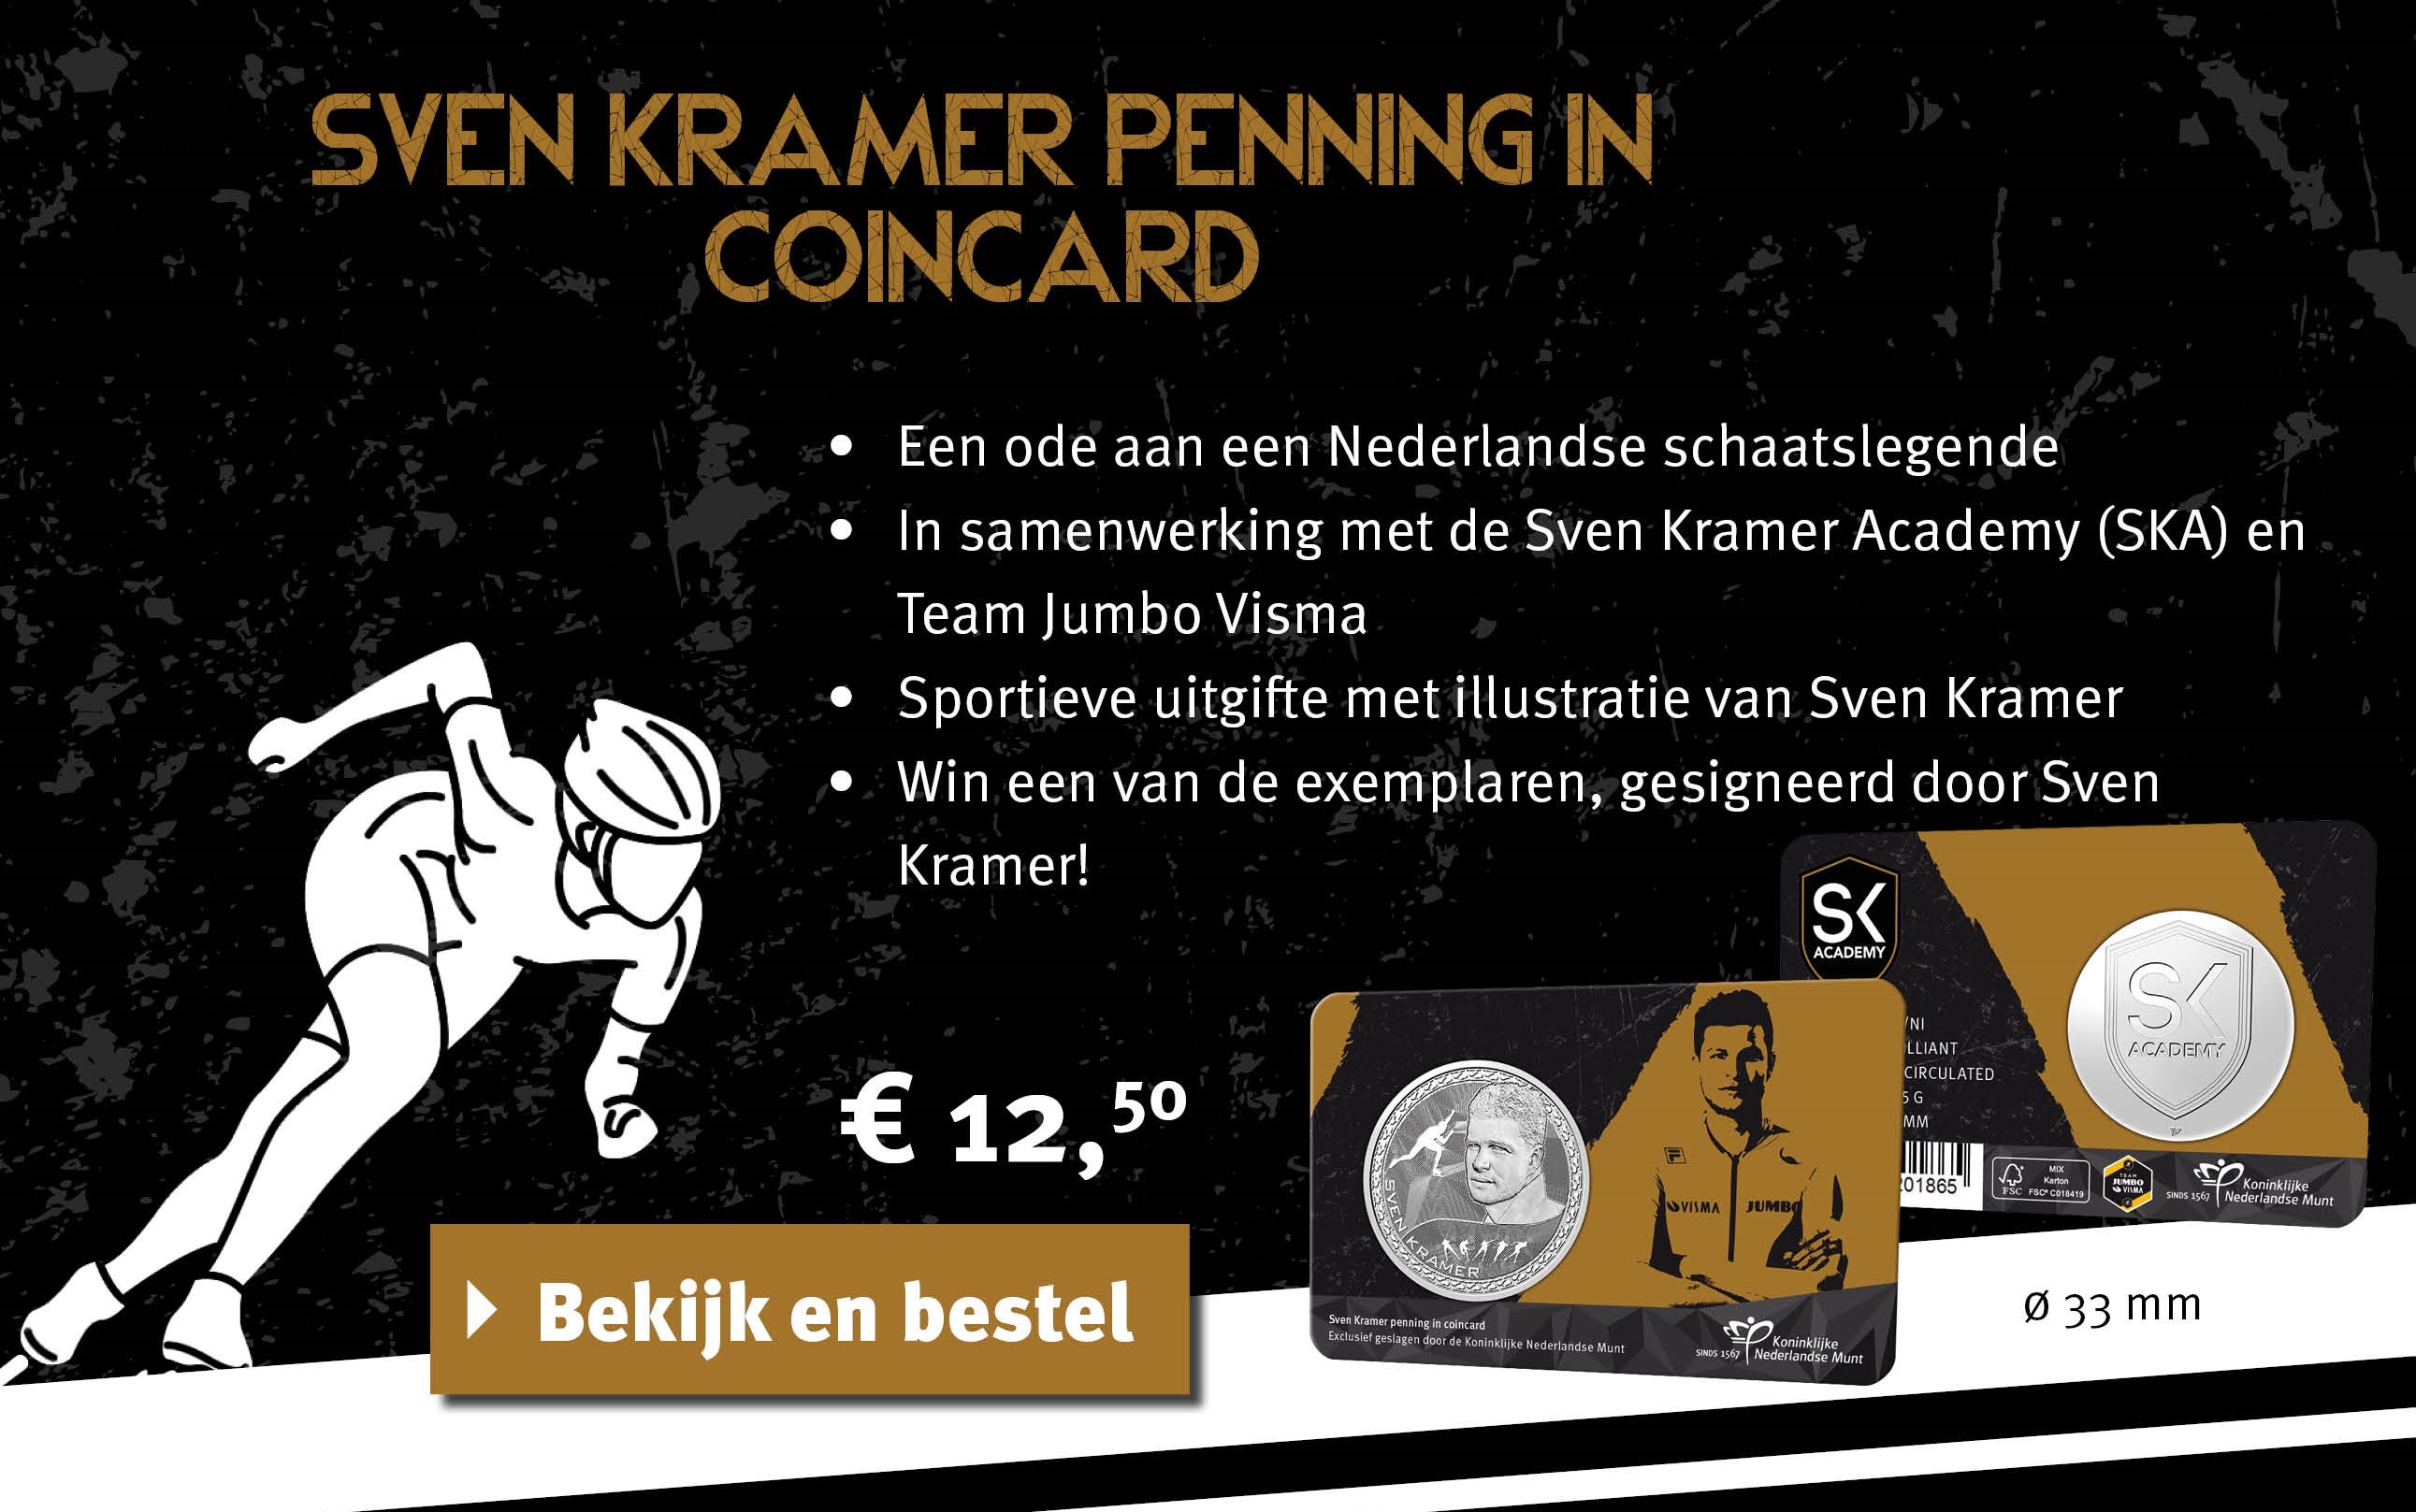 Bekijk en bestel: Sven Kramer penning in coincard